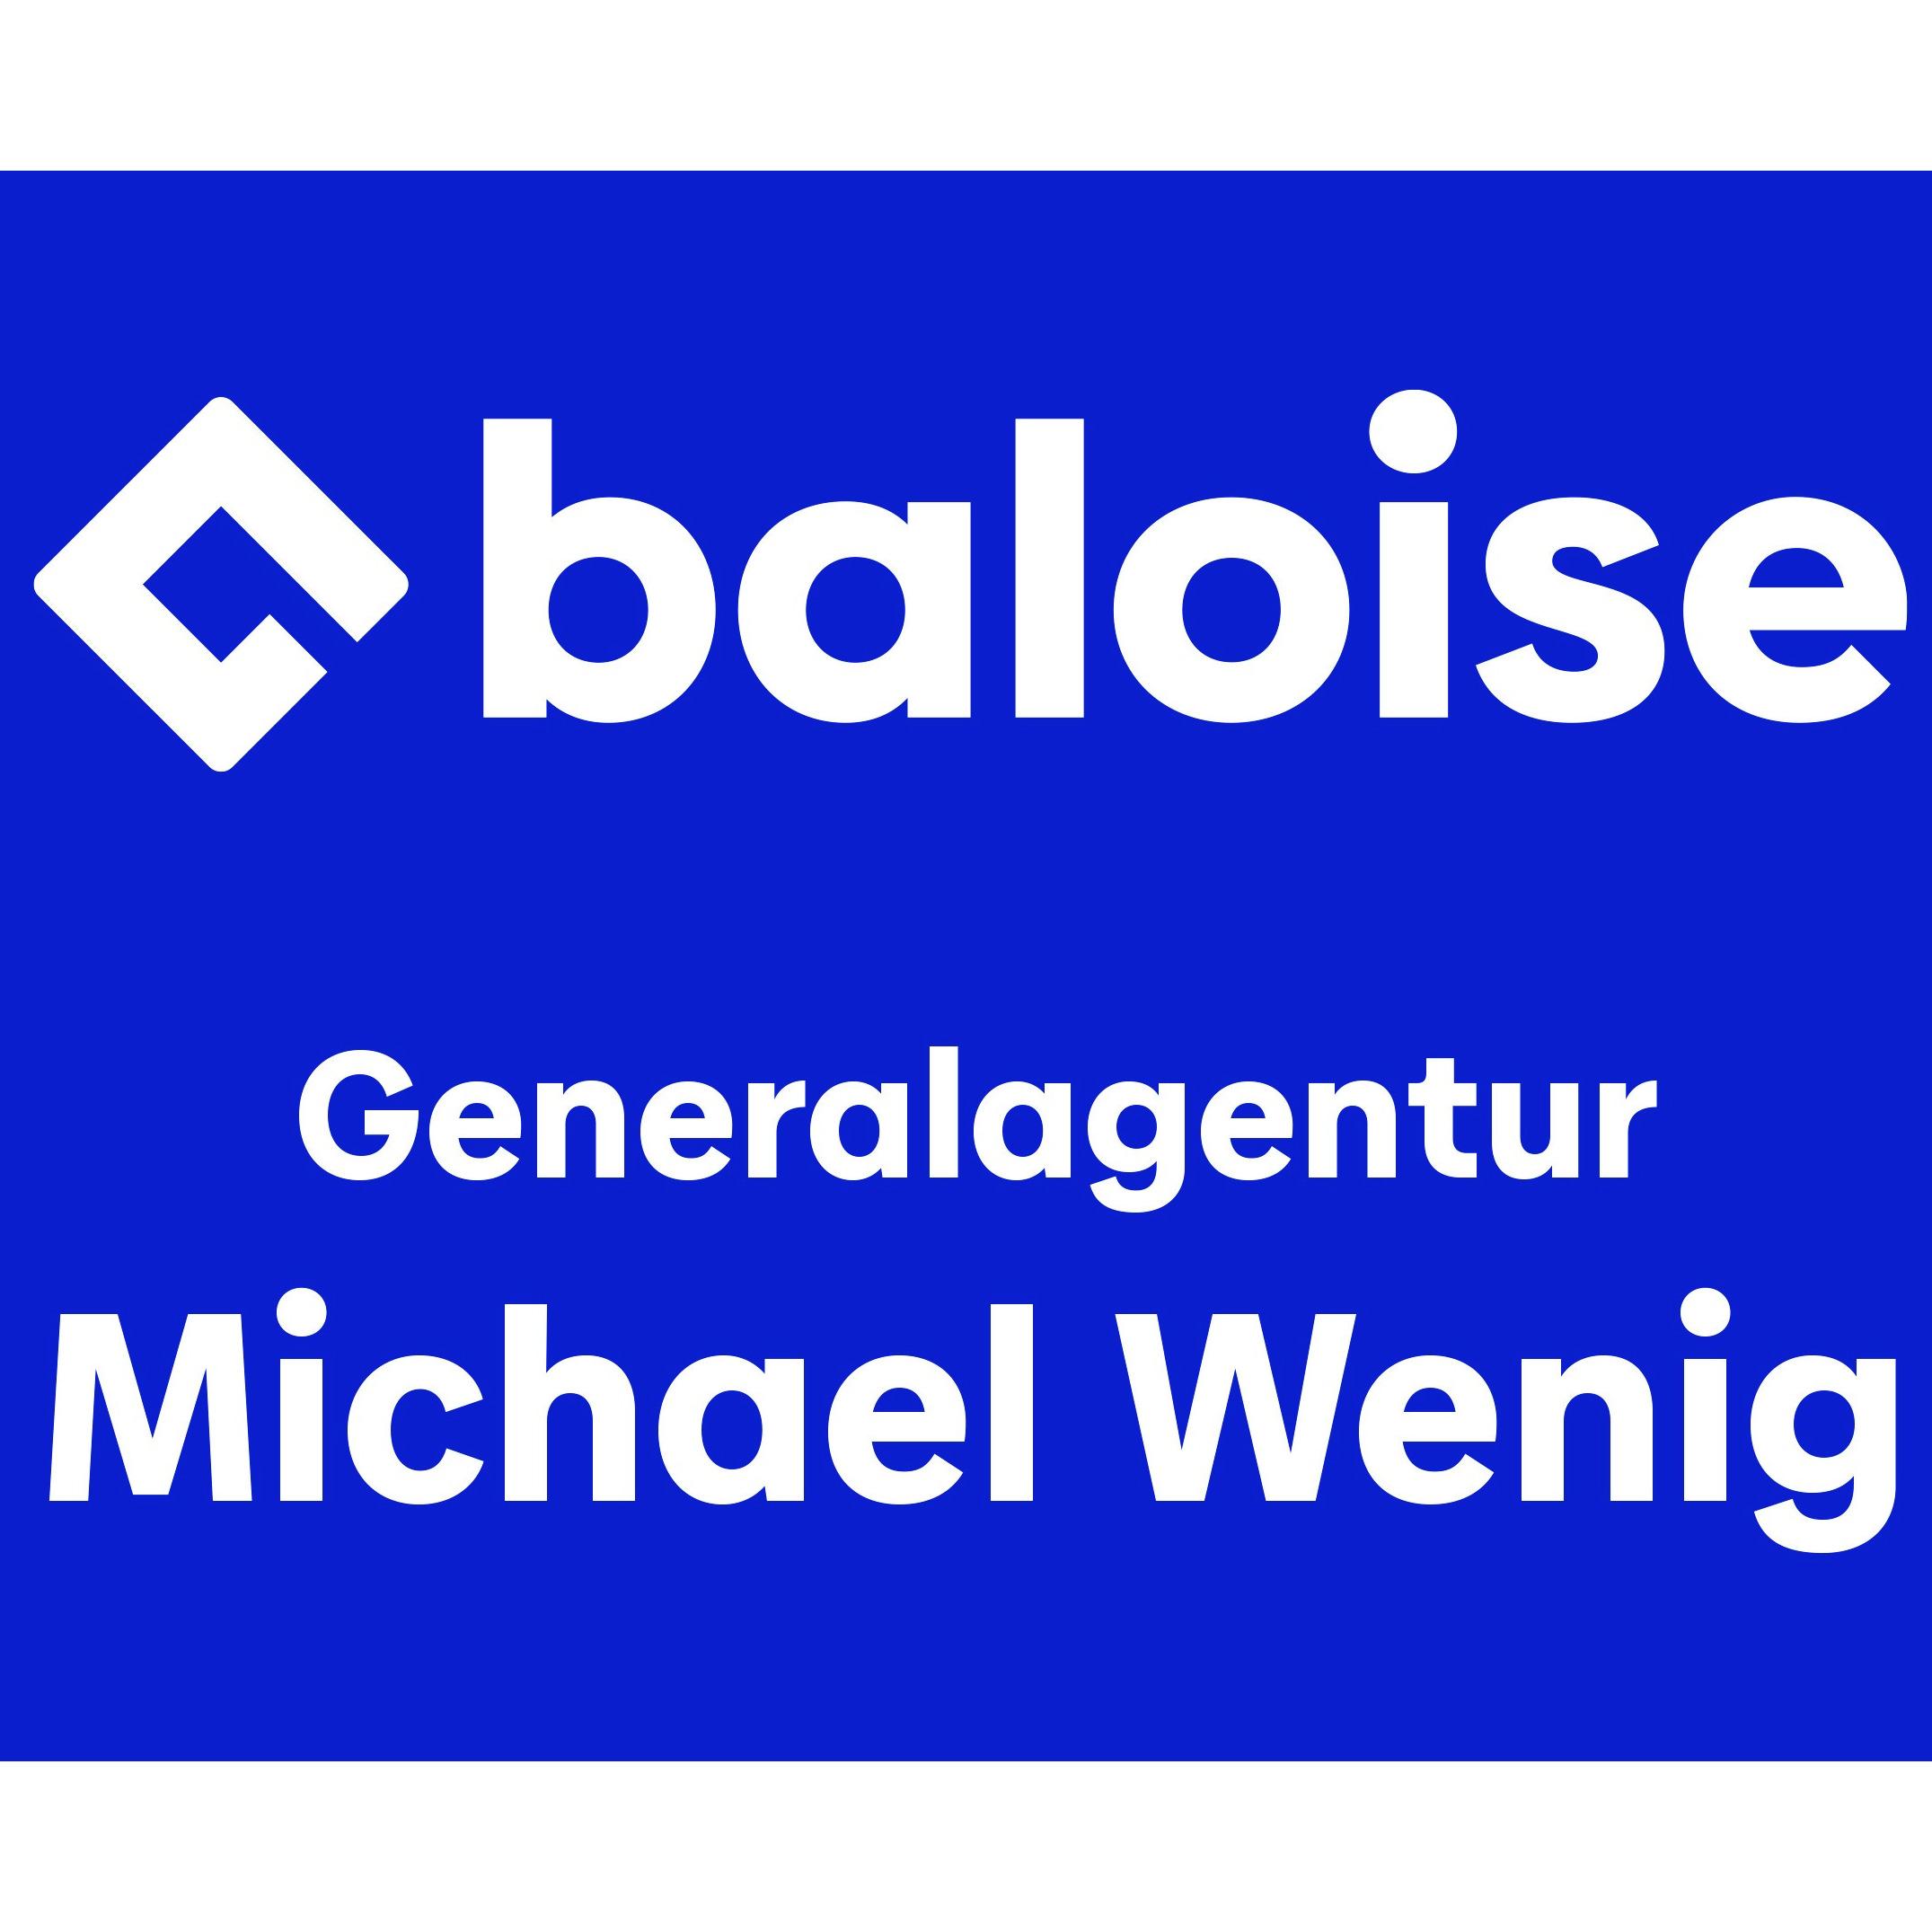 Baloise - Generalagentur Michael Wenig in Freiburg Logo